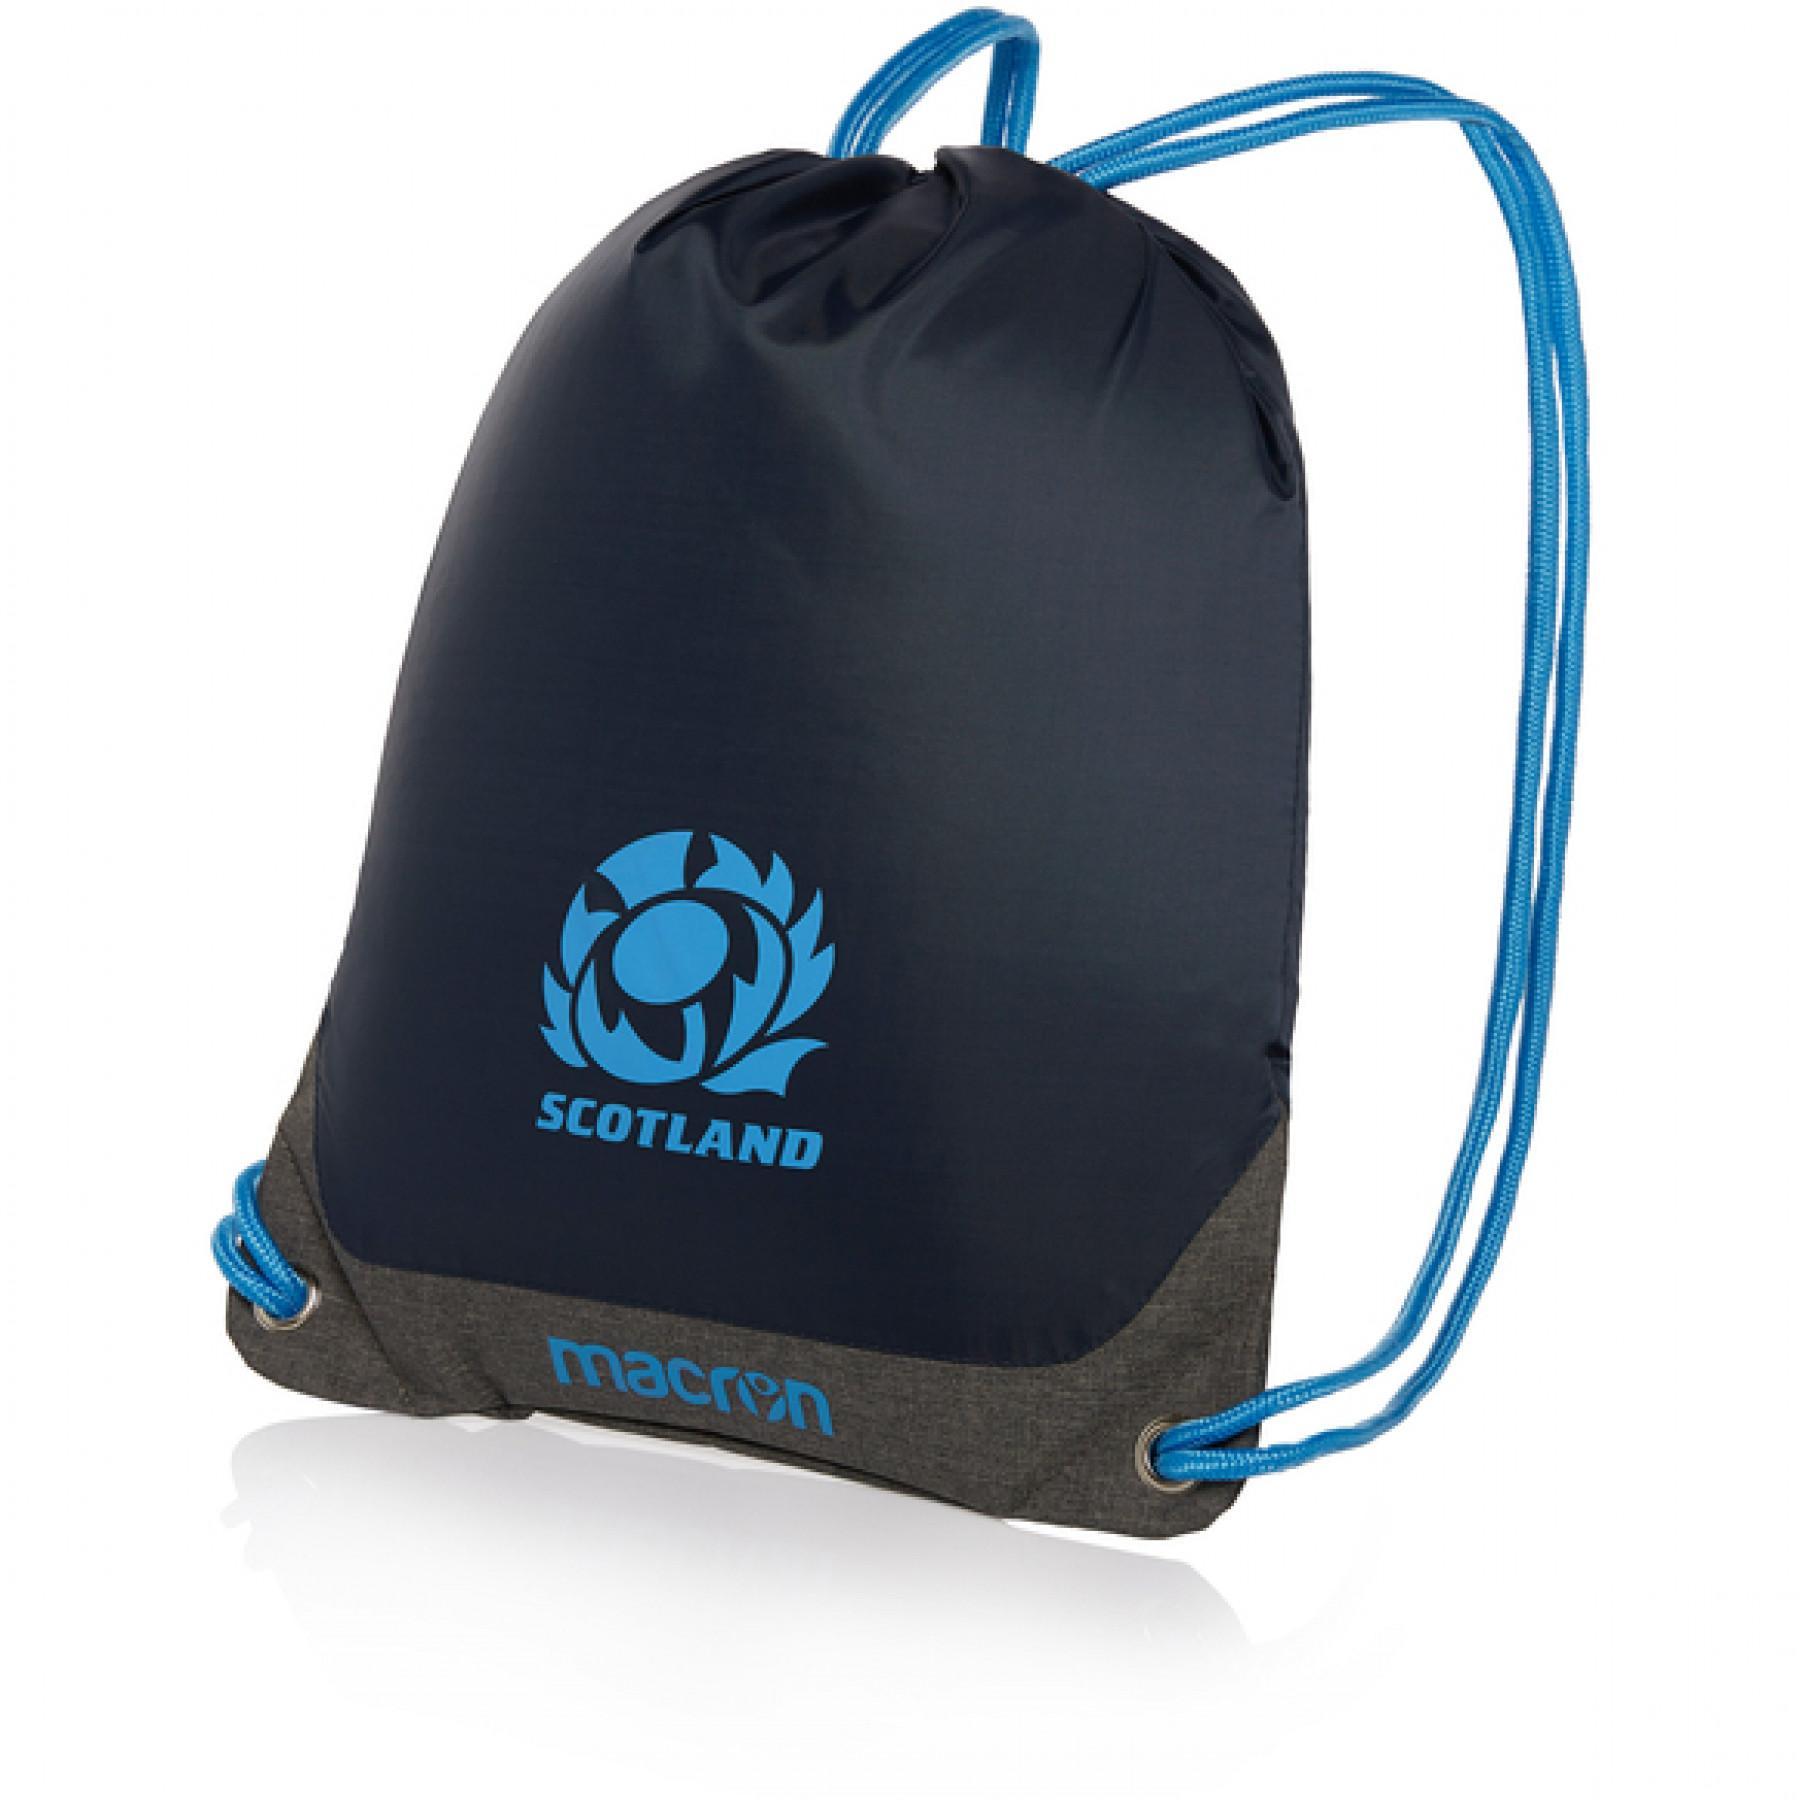 Scotland duffel bag 2018